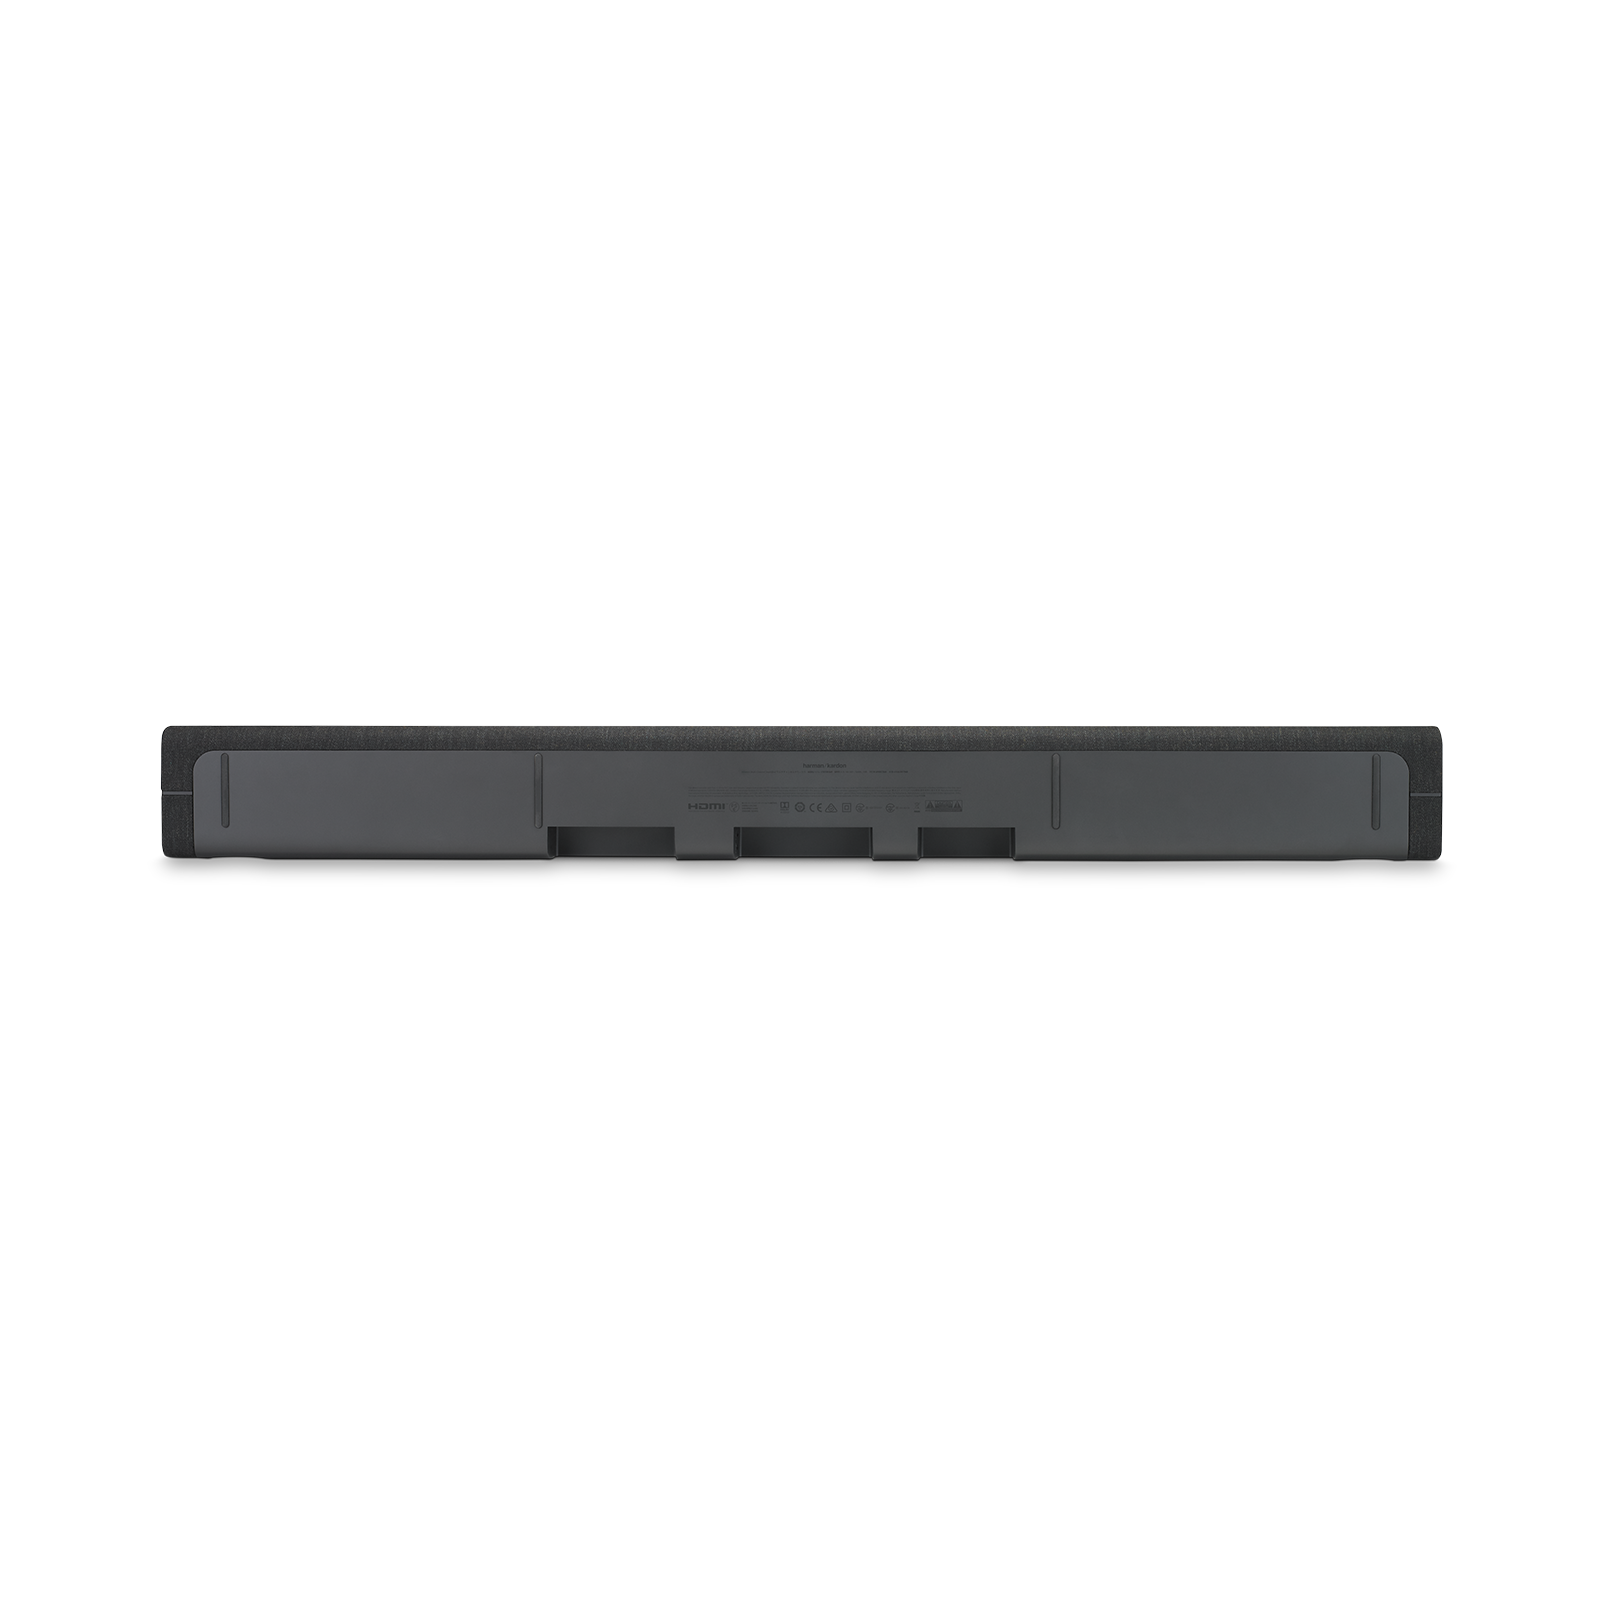 Harman Kardon Citation Bar - Black - The smartest soundbar for movies and music - Detailshot 2